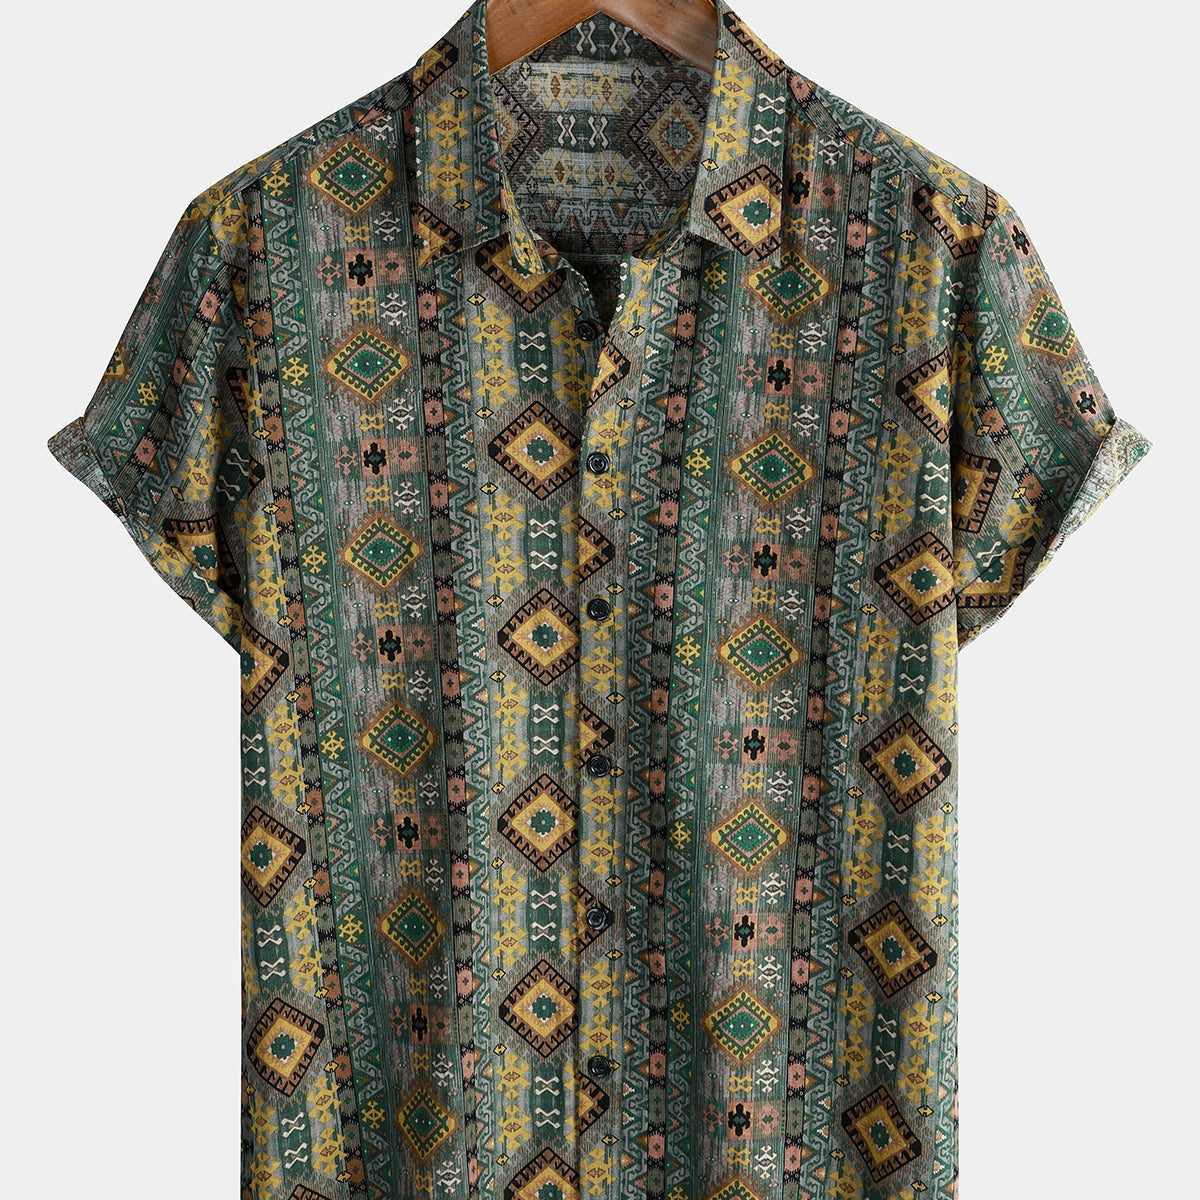 Men's Retro Short Sleeve 70s Aztec Print Button Up Shirt